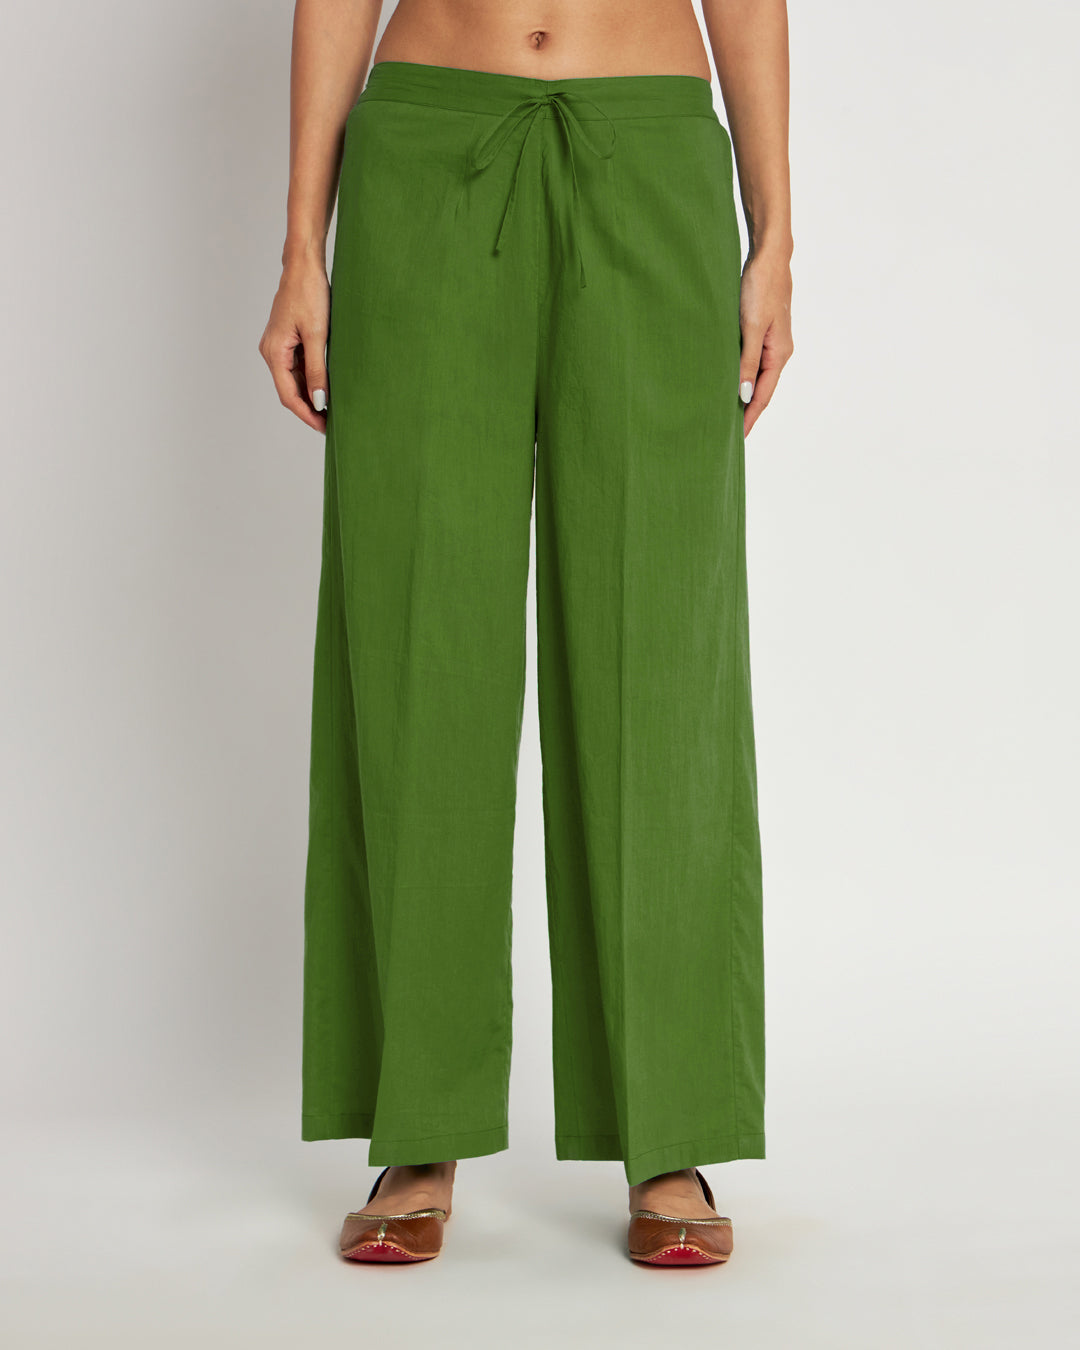 Combo: Beige & Greening Spring Wide Pants- Set Of 2